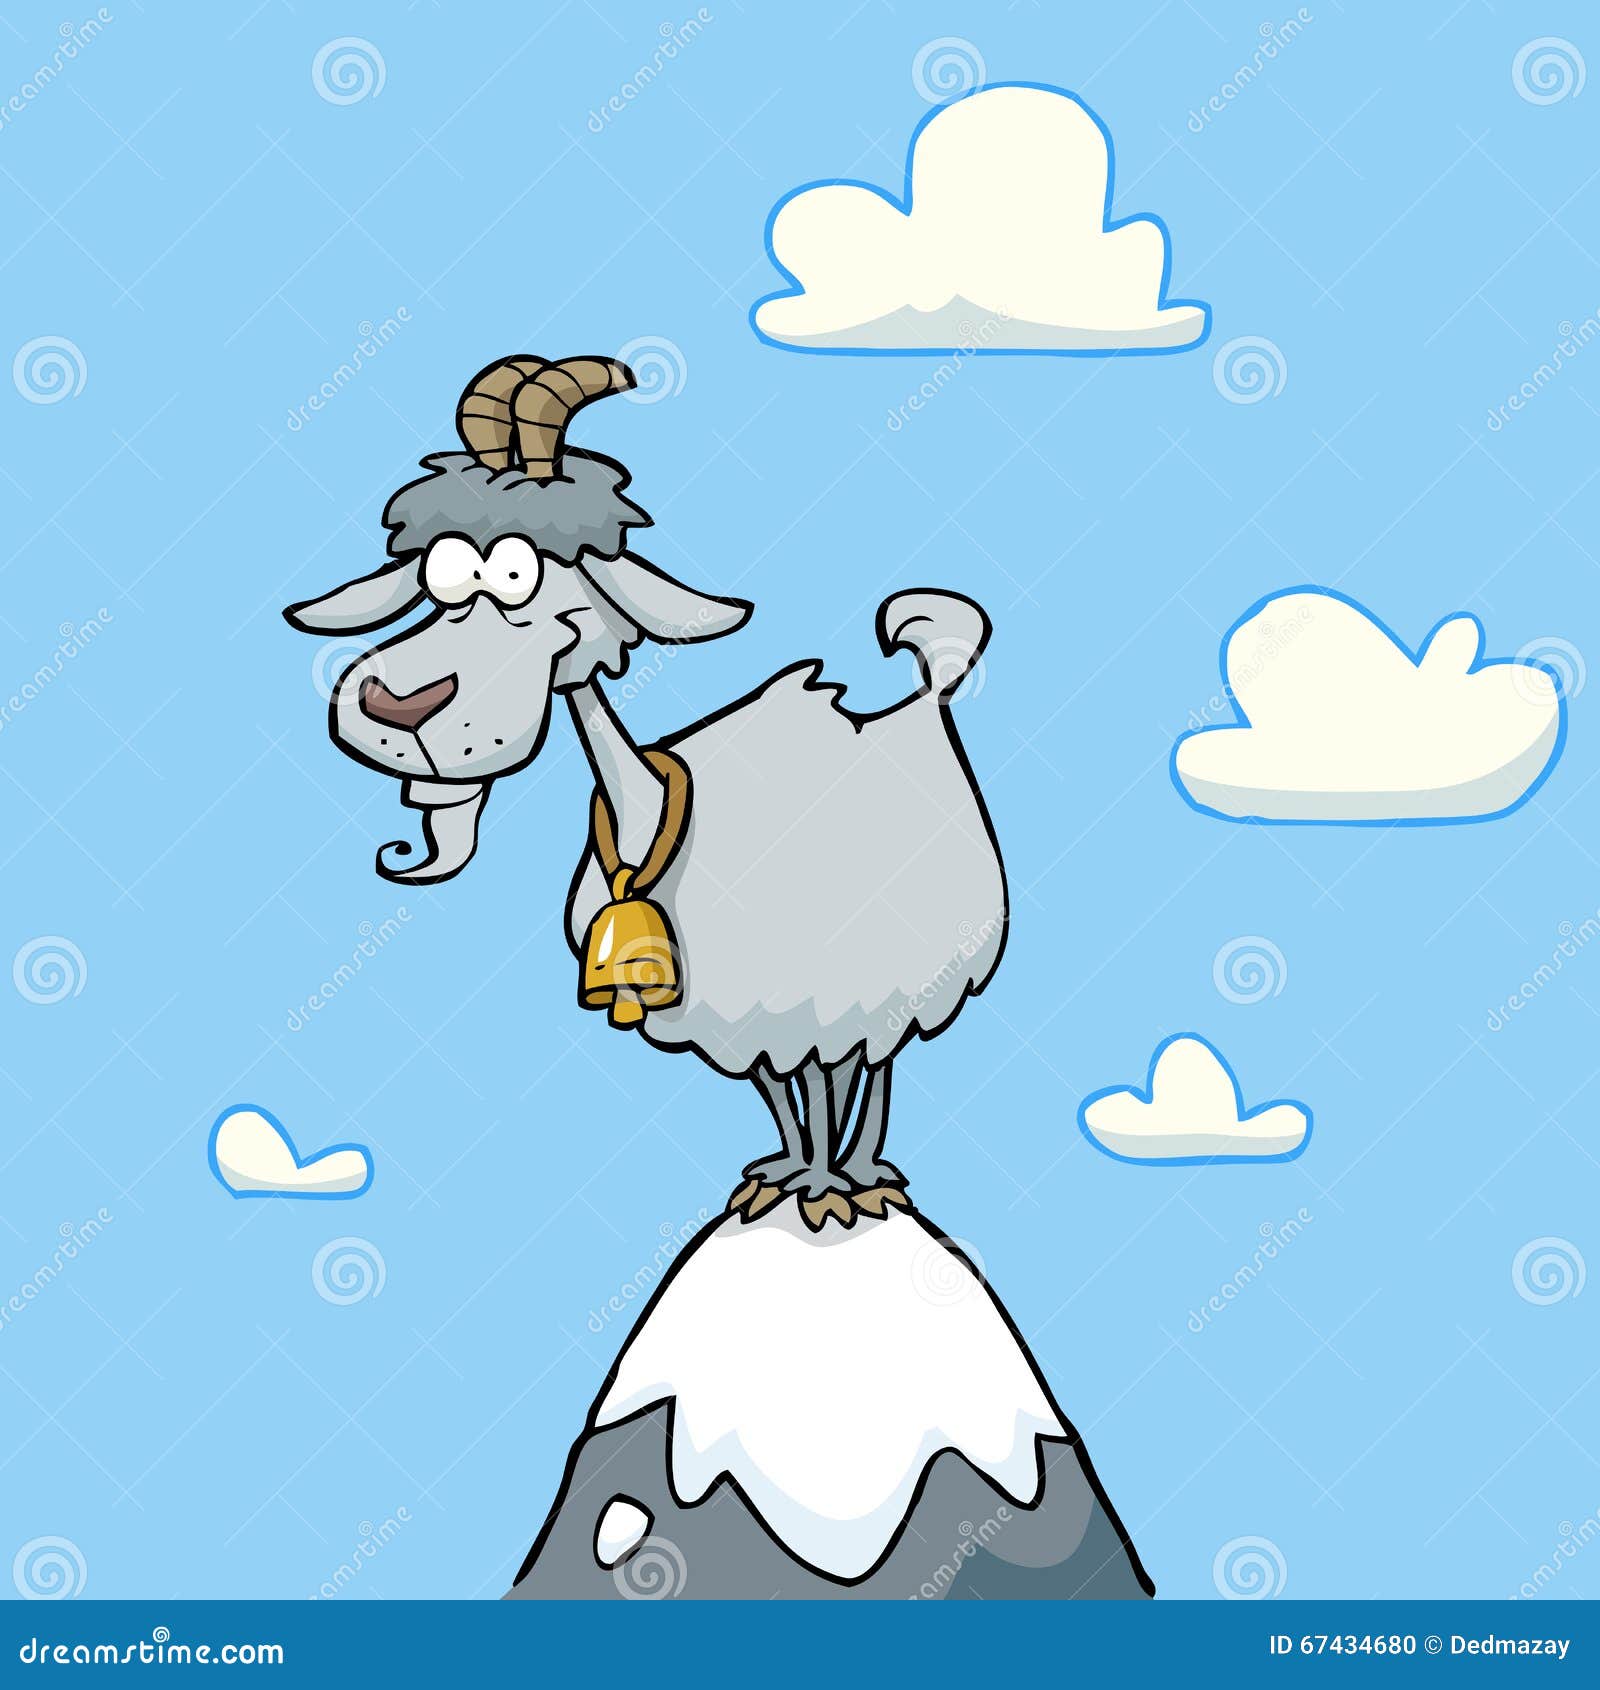 Cartoon mountain goat stock vector. Illustration of cute - 67434680